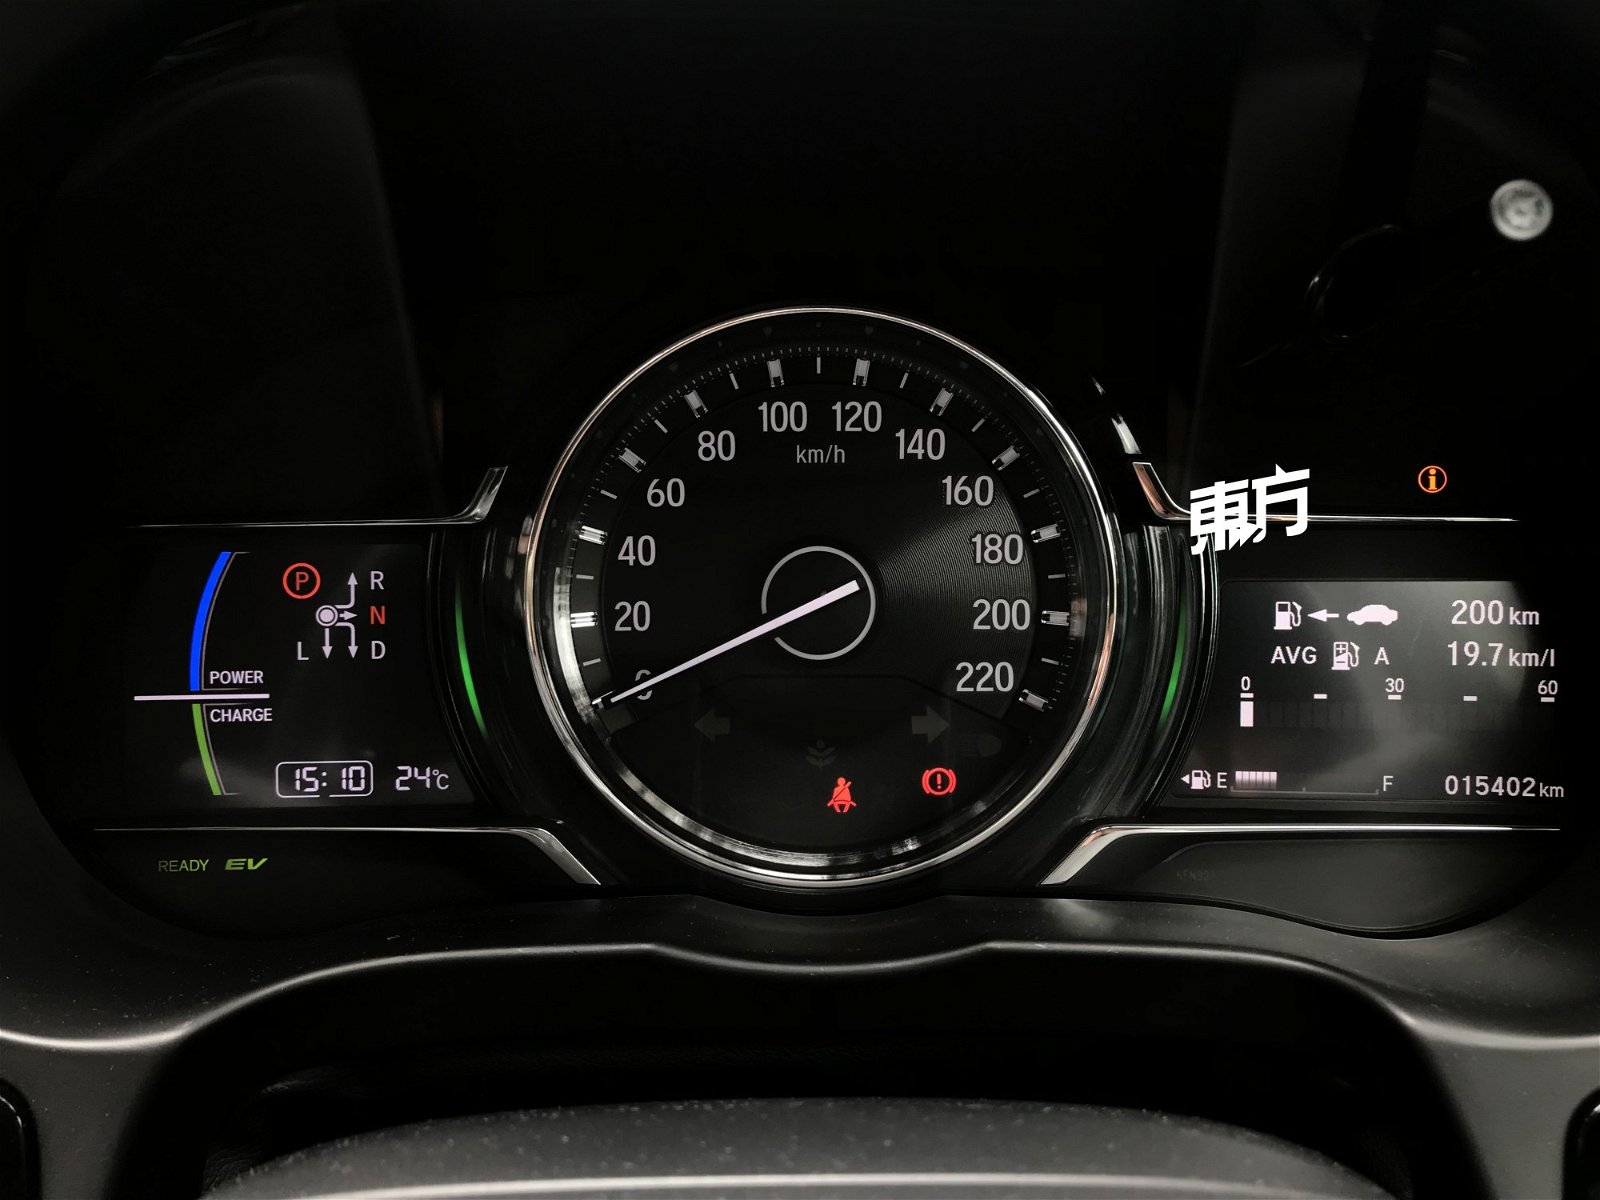 ▲City Hybrid配置汽油款所没有的彩色液晶多功能仪表显示屏，显示动力输出状态、油耗等讯息，充满运动感。